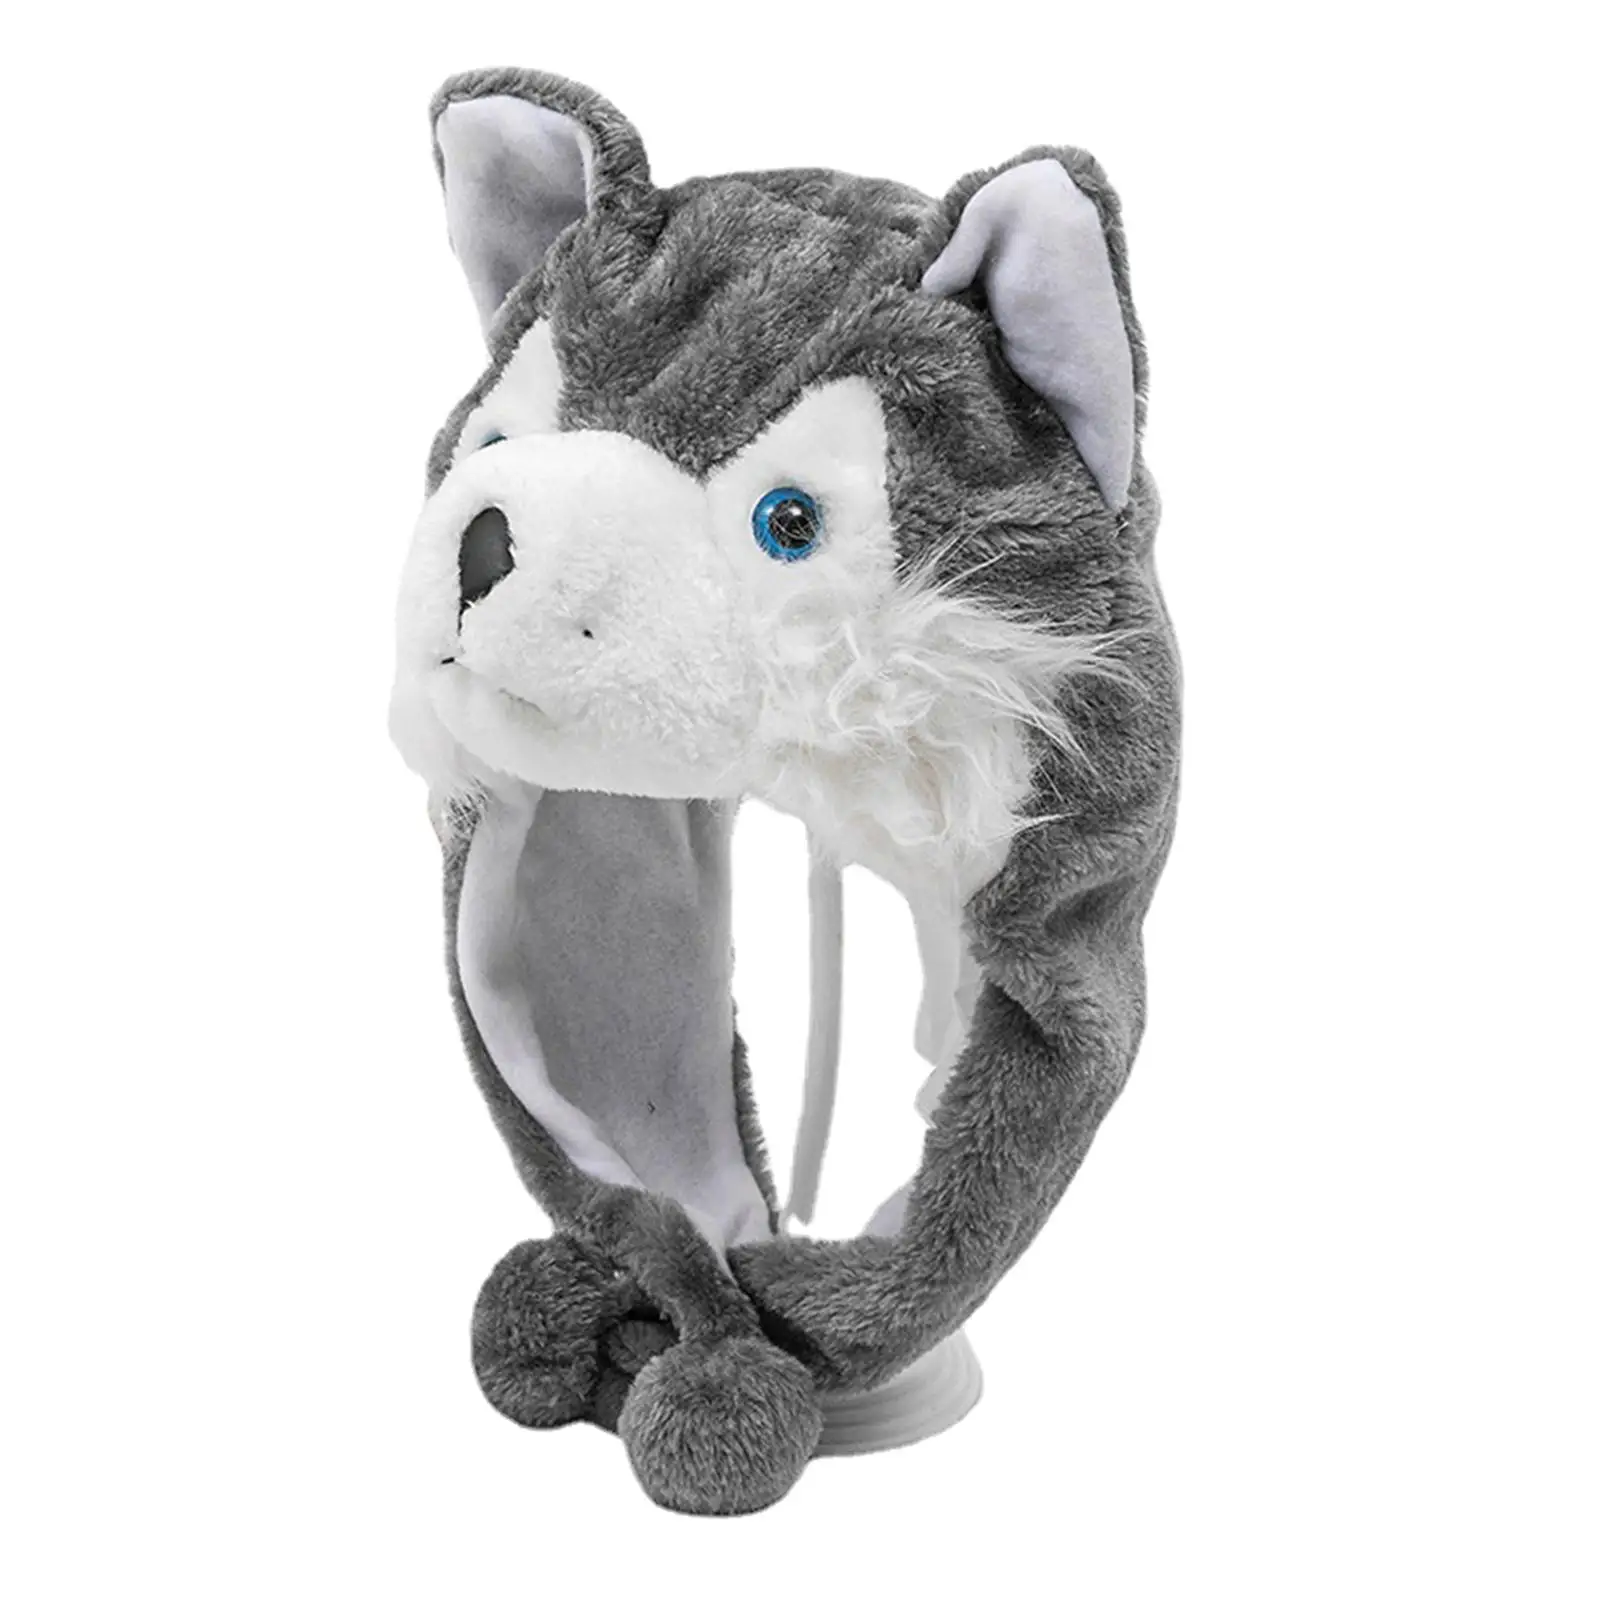 Cute Plush Animal Winter Hat Fancy Dress Halloween Costume Headgear Husky Beanie for Photo Prop Accessories Unisex Kids Cosplay